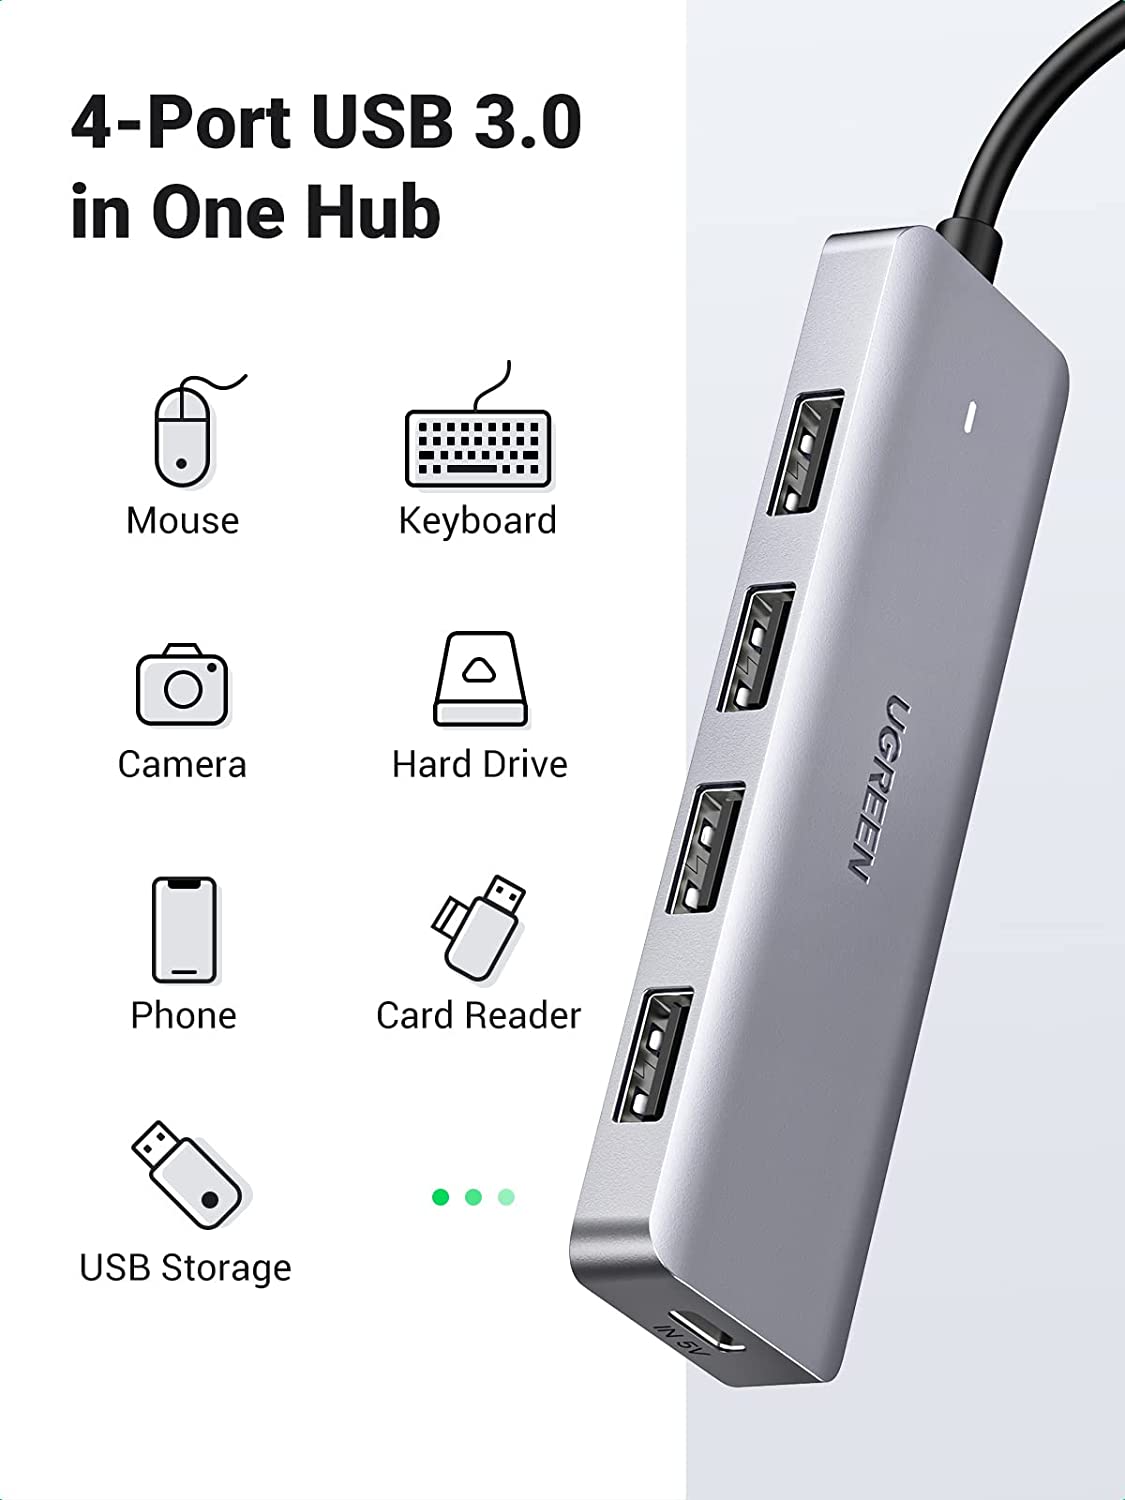 Hub USB 3.0 4 ports, alimentation 10W